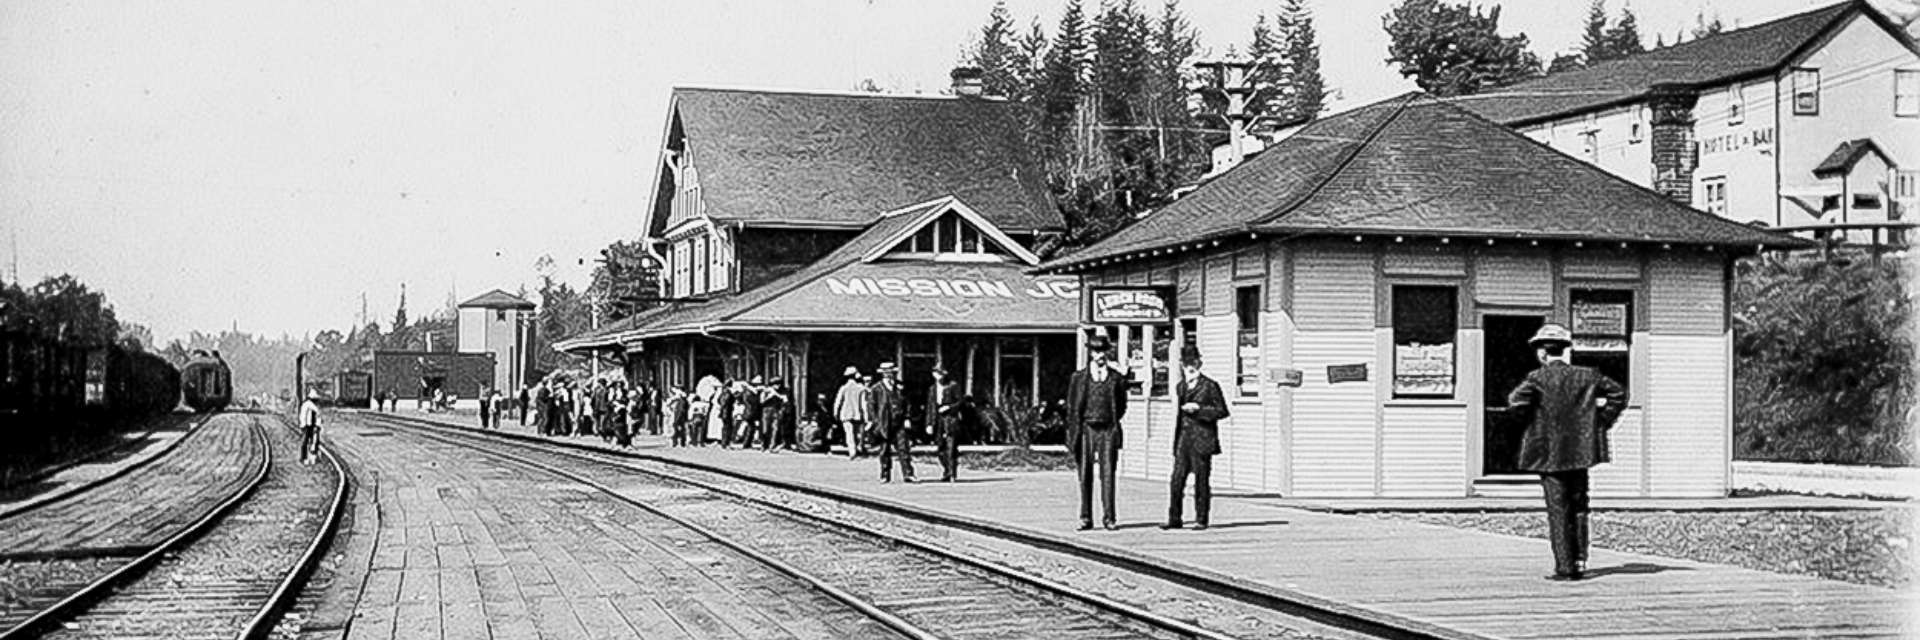 Mission City Train Station